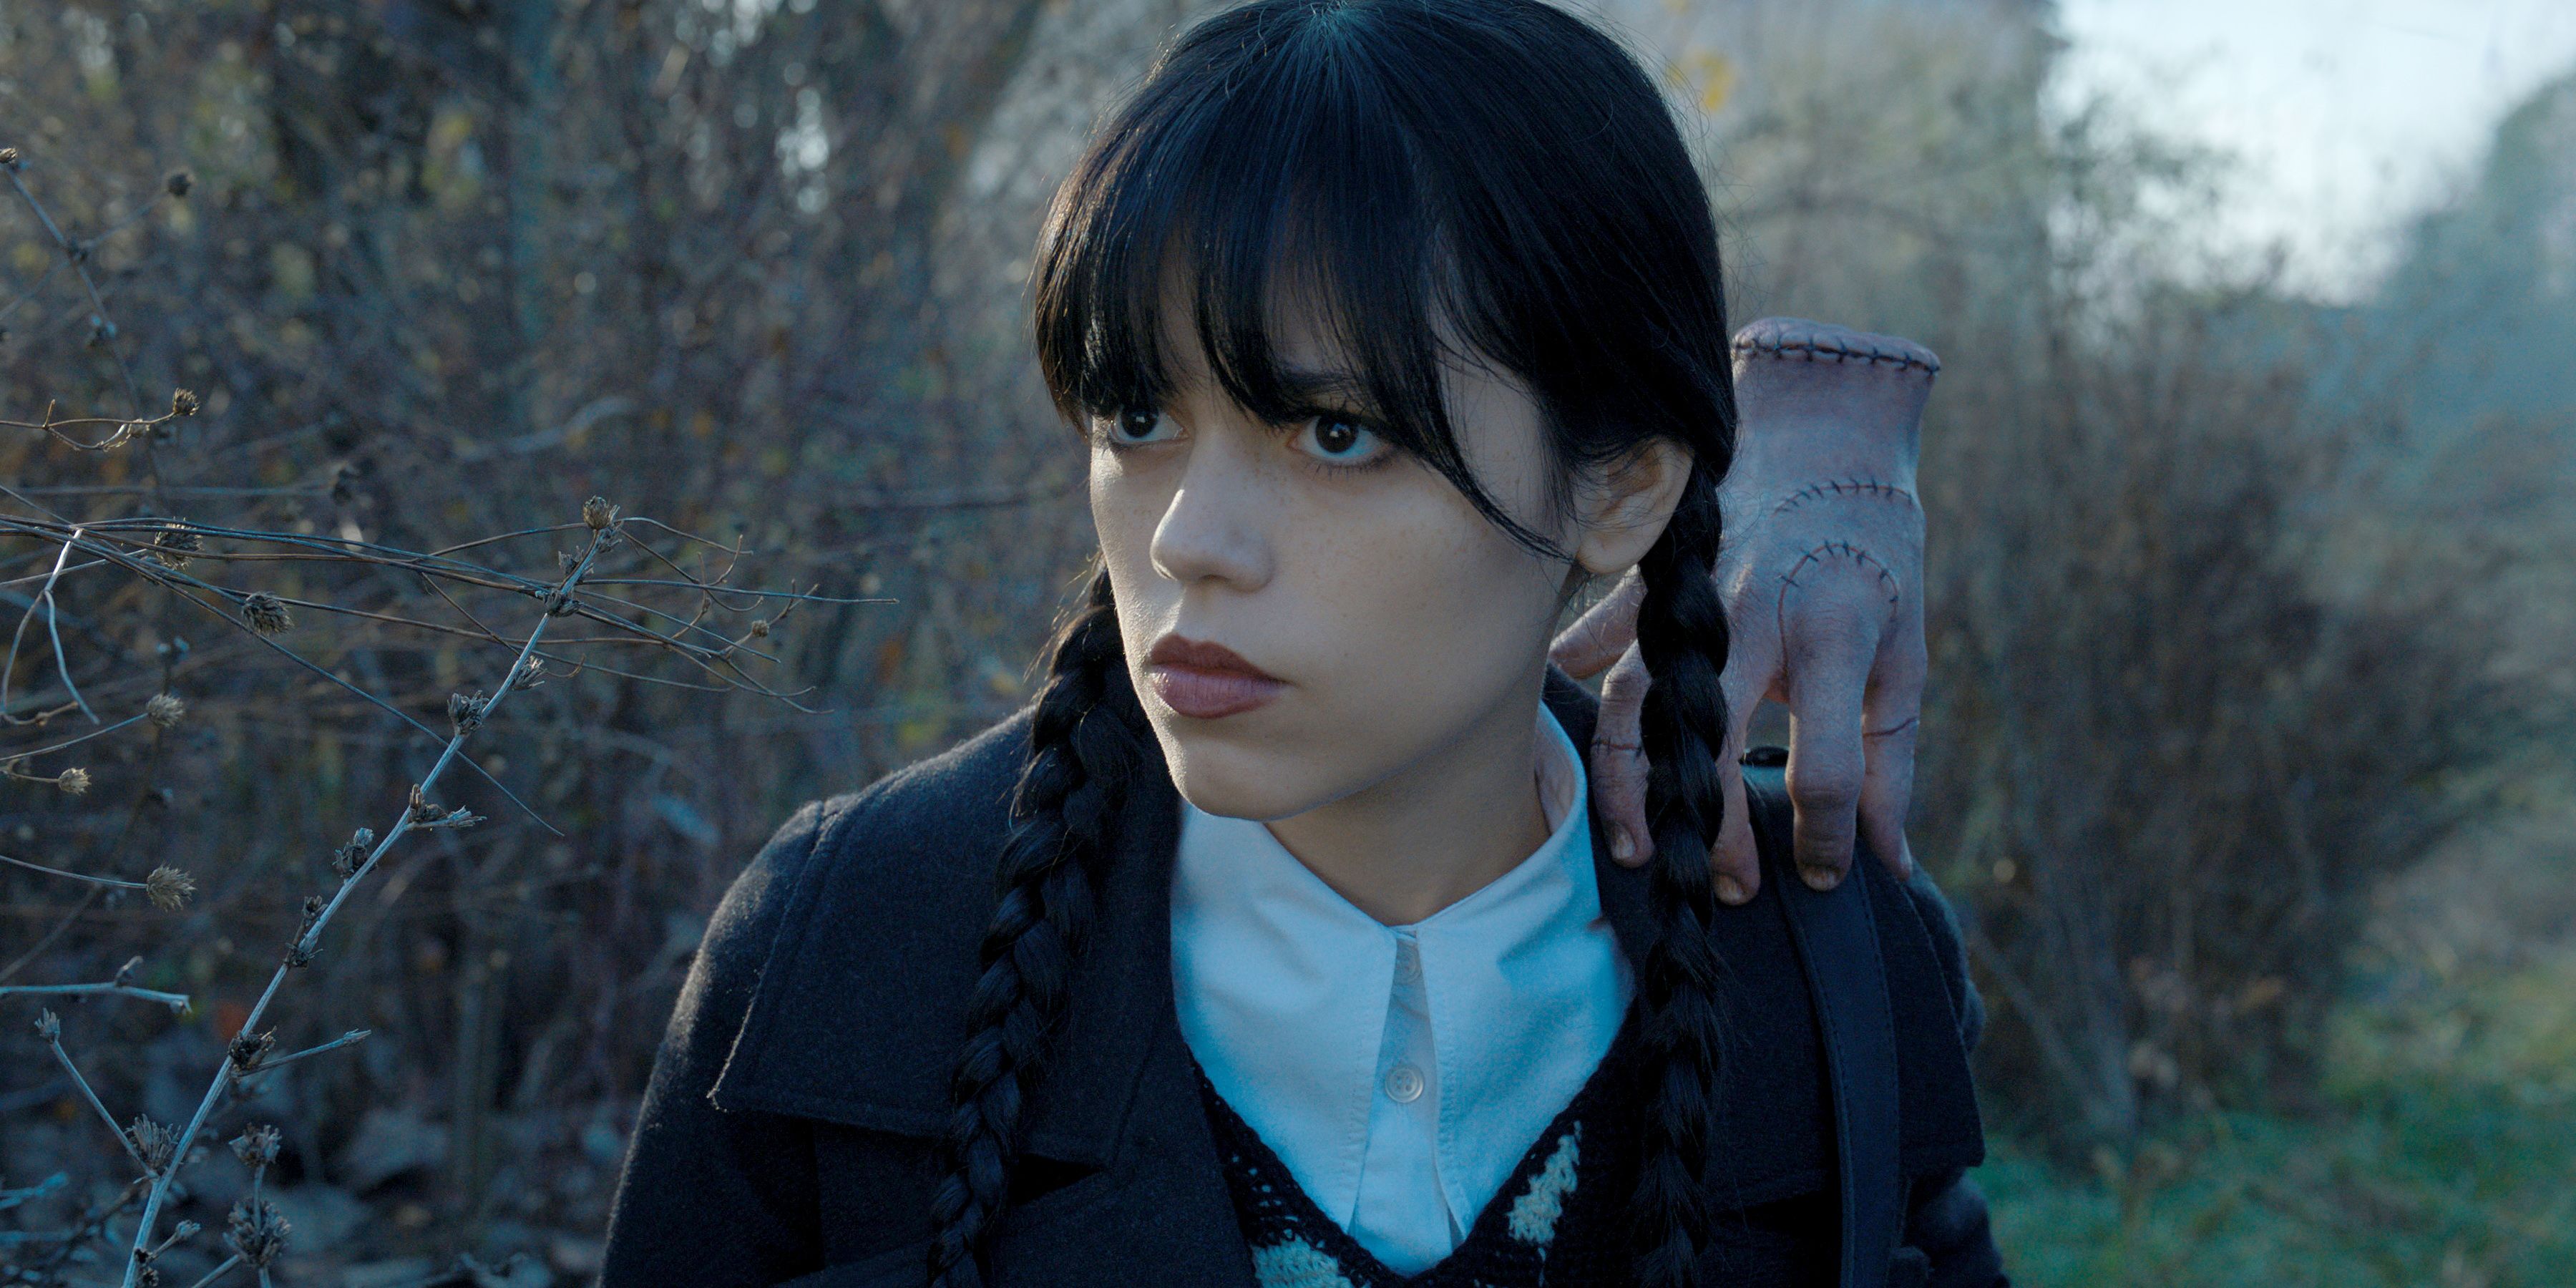 Wednesday' review: Jenna Ortega makes Netflix's Addams Family